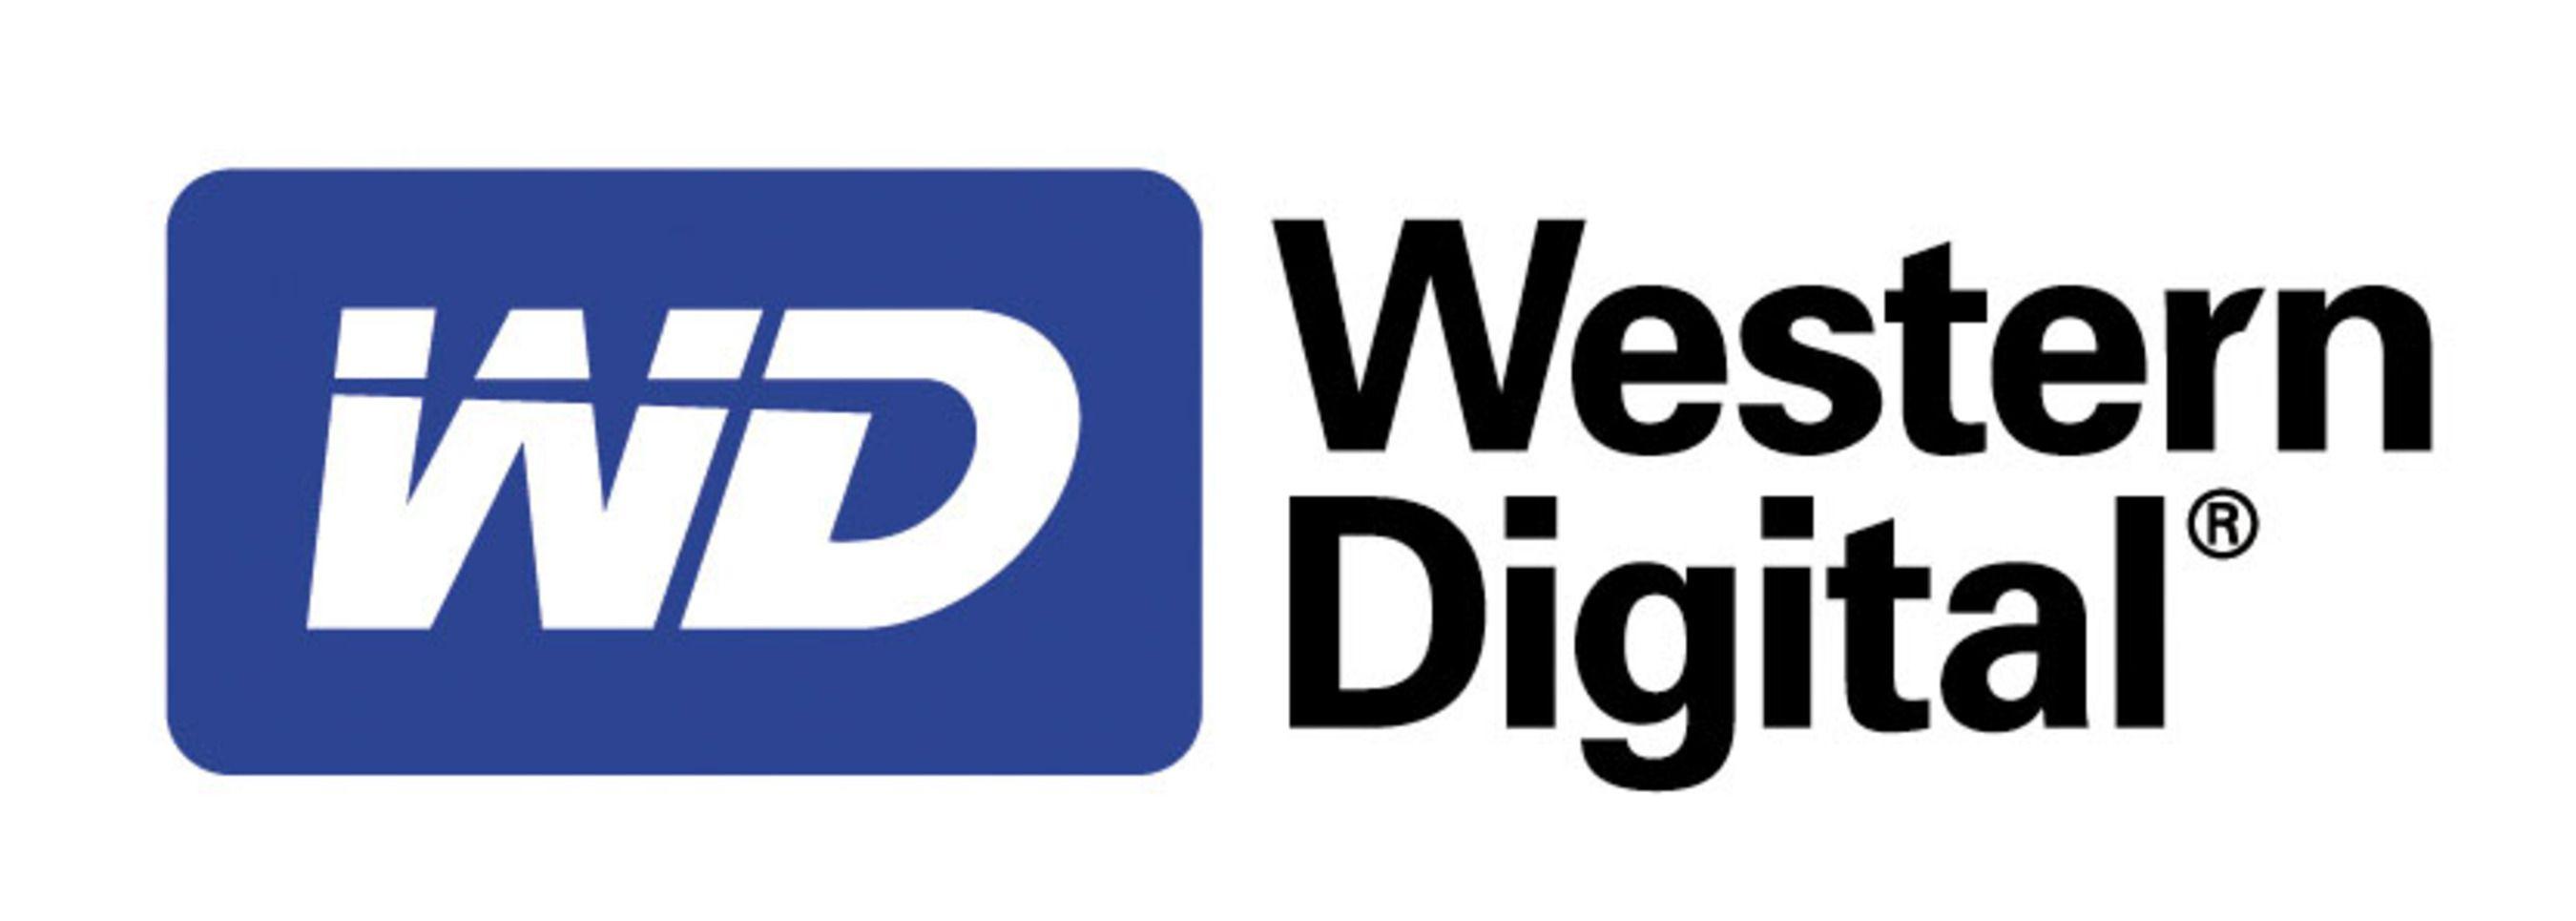 Western Digital Corporation Logo - Western Digital Announces Acquisition Of SanDisk